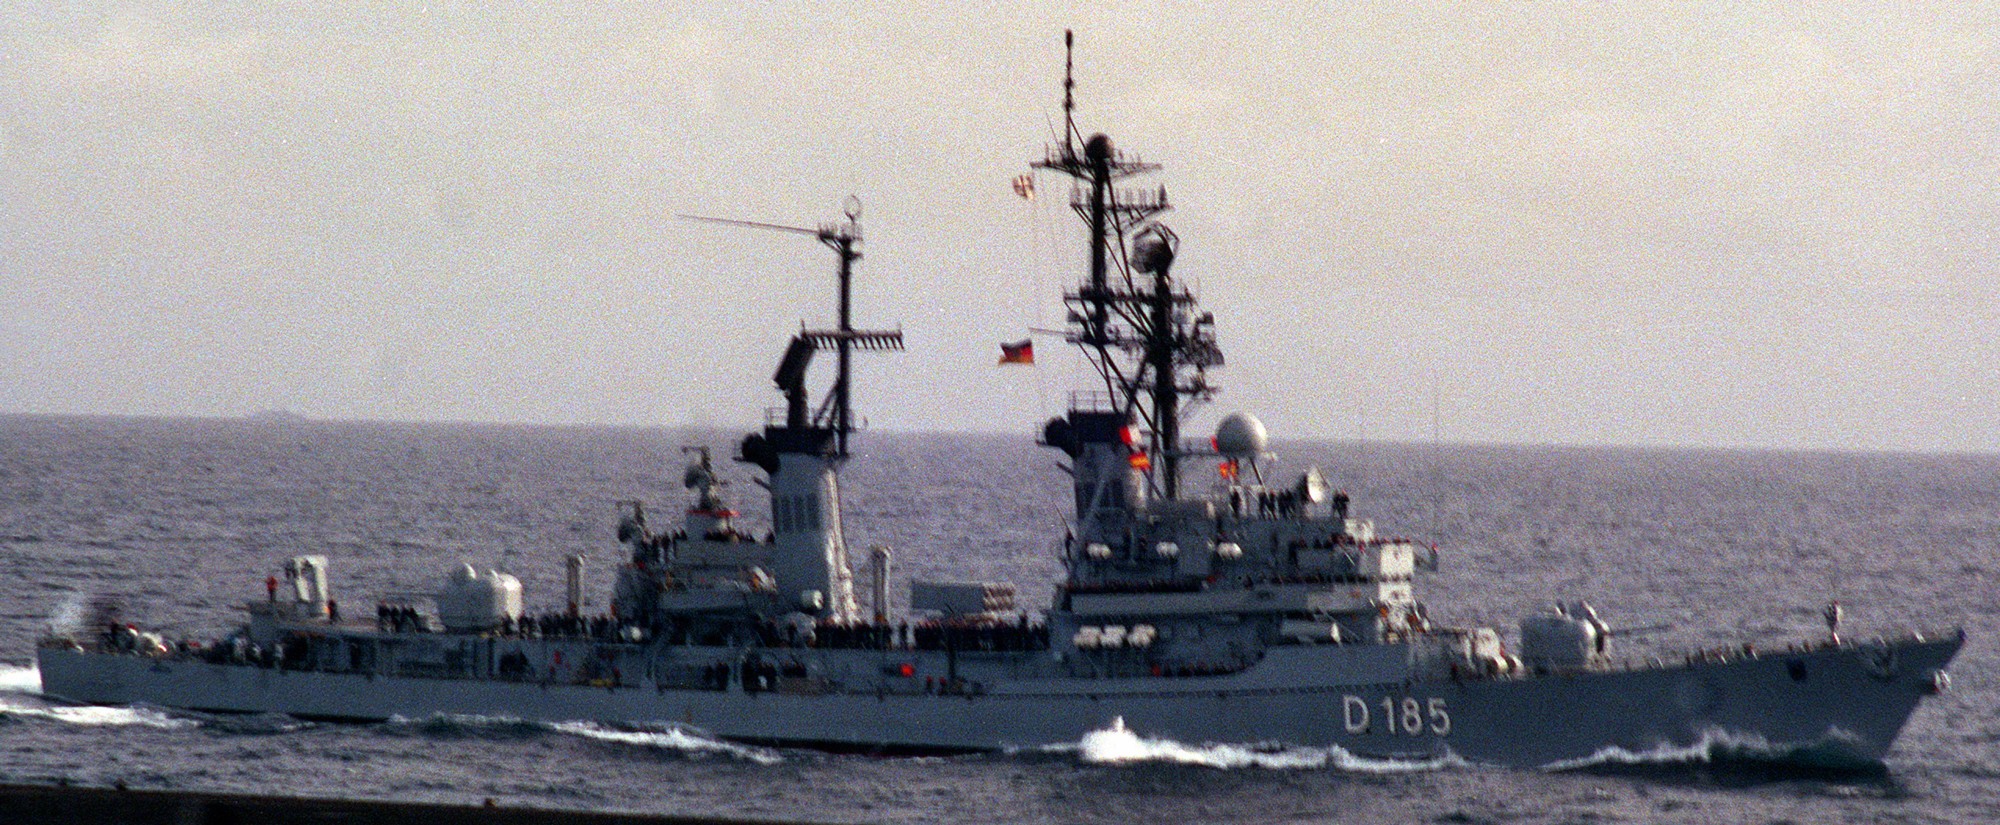 d-185 fgs lütjens type 103 class guided missile destroyer german navy deutsche marine 05